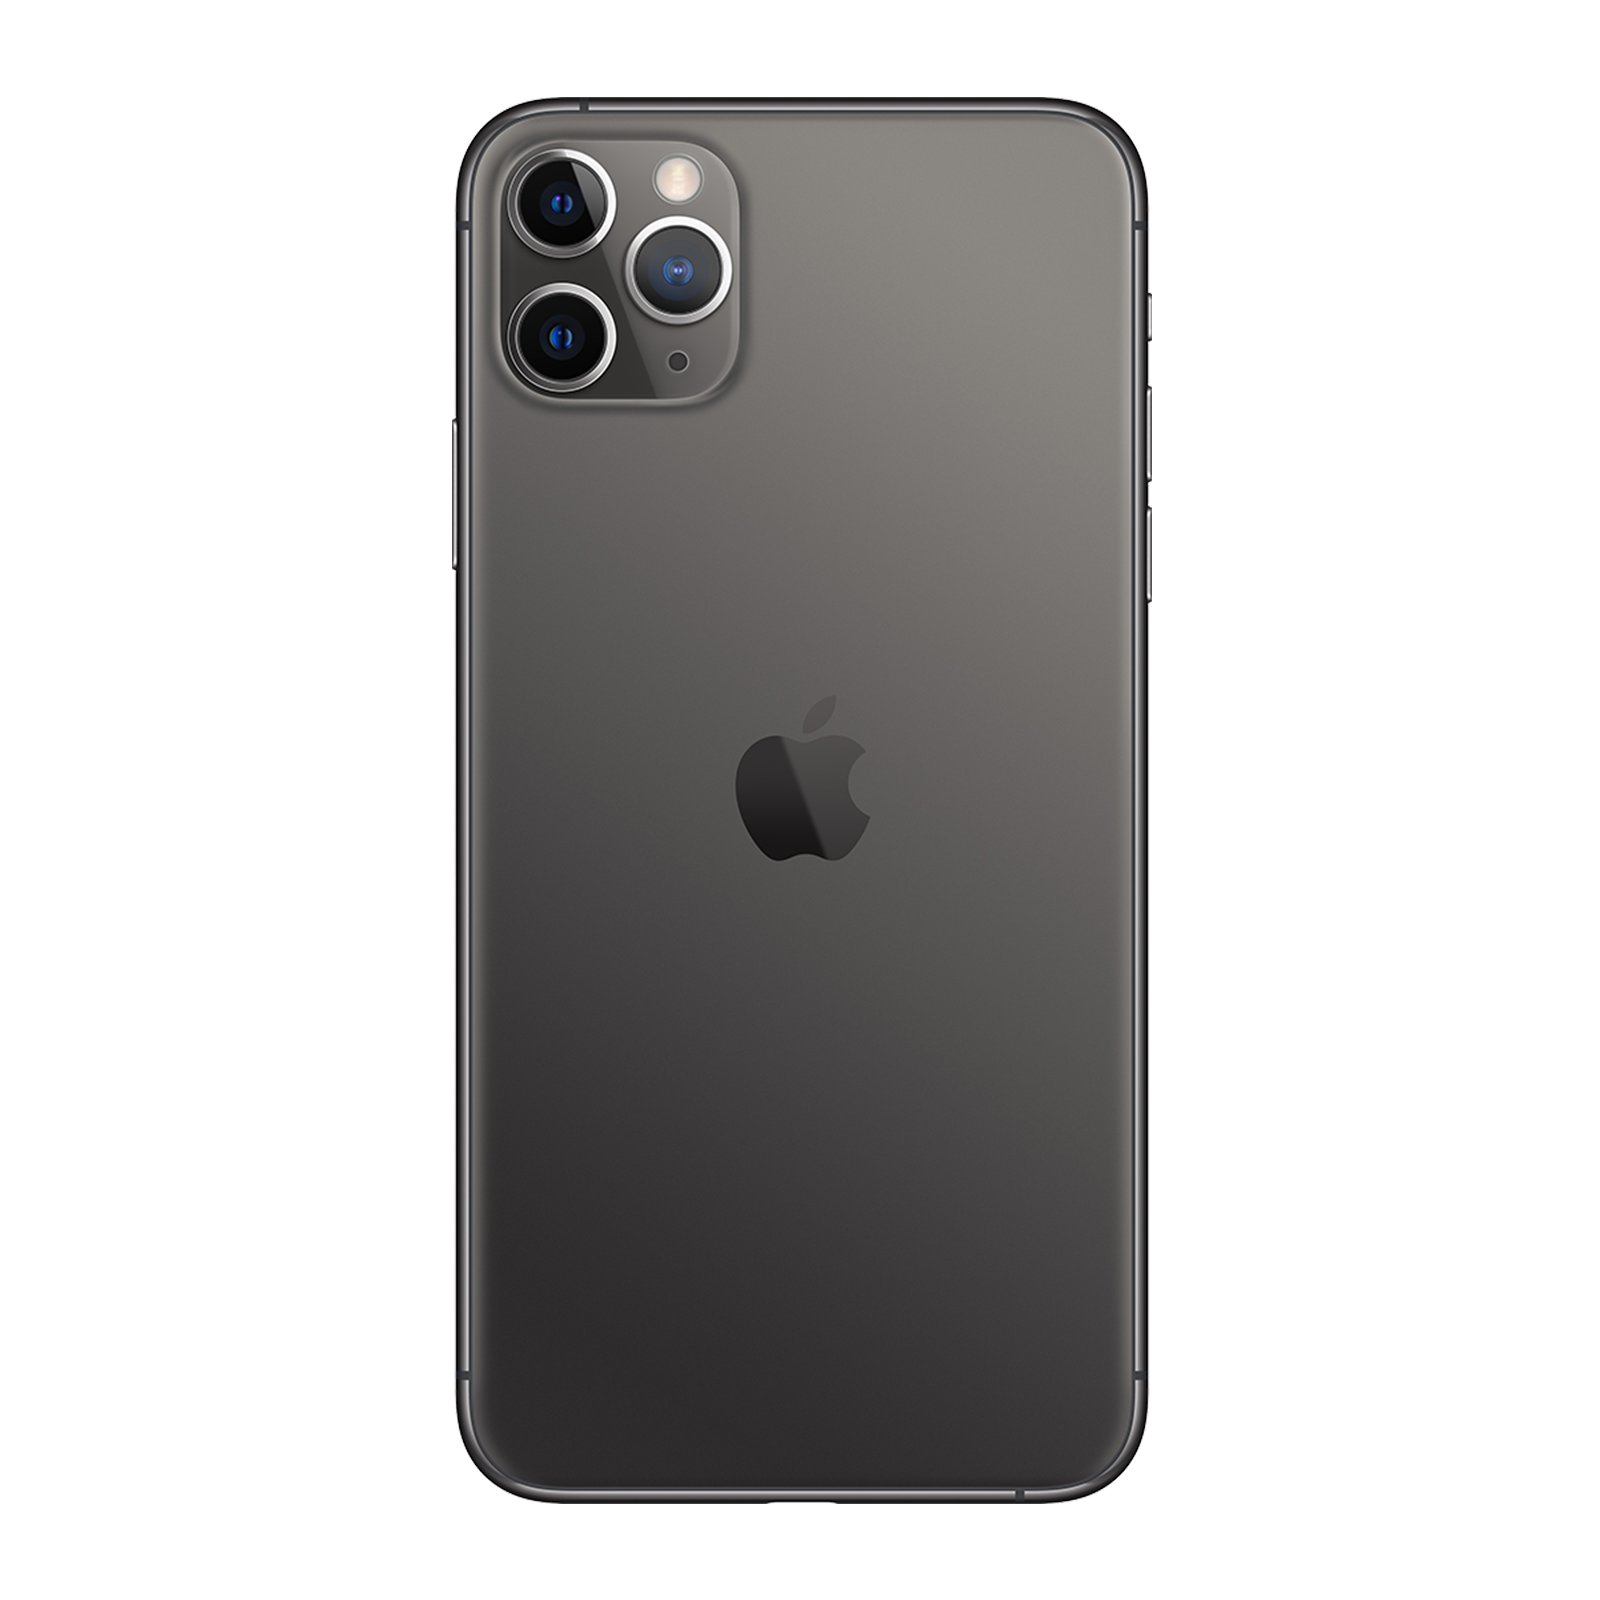 Apple iPhone 11 Pro 256GB Space Grey Very Good - Verizon